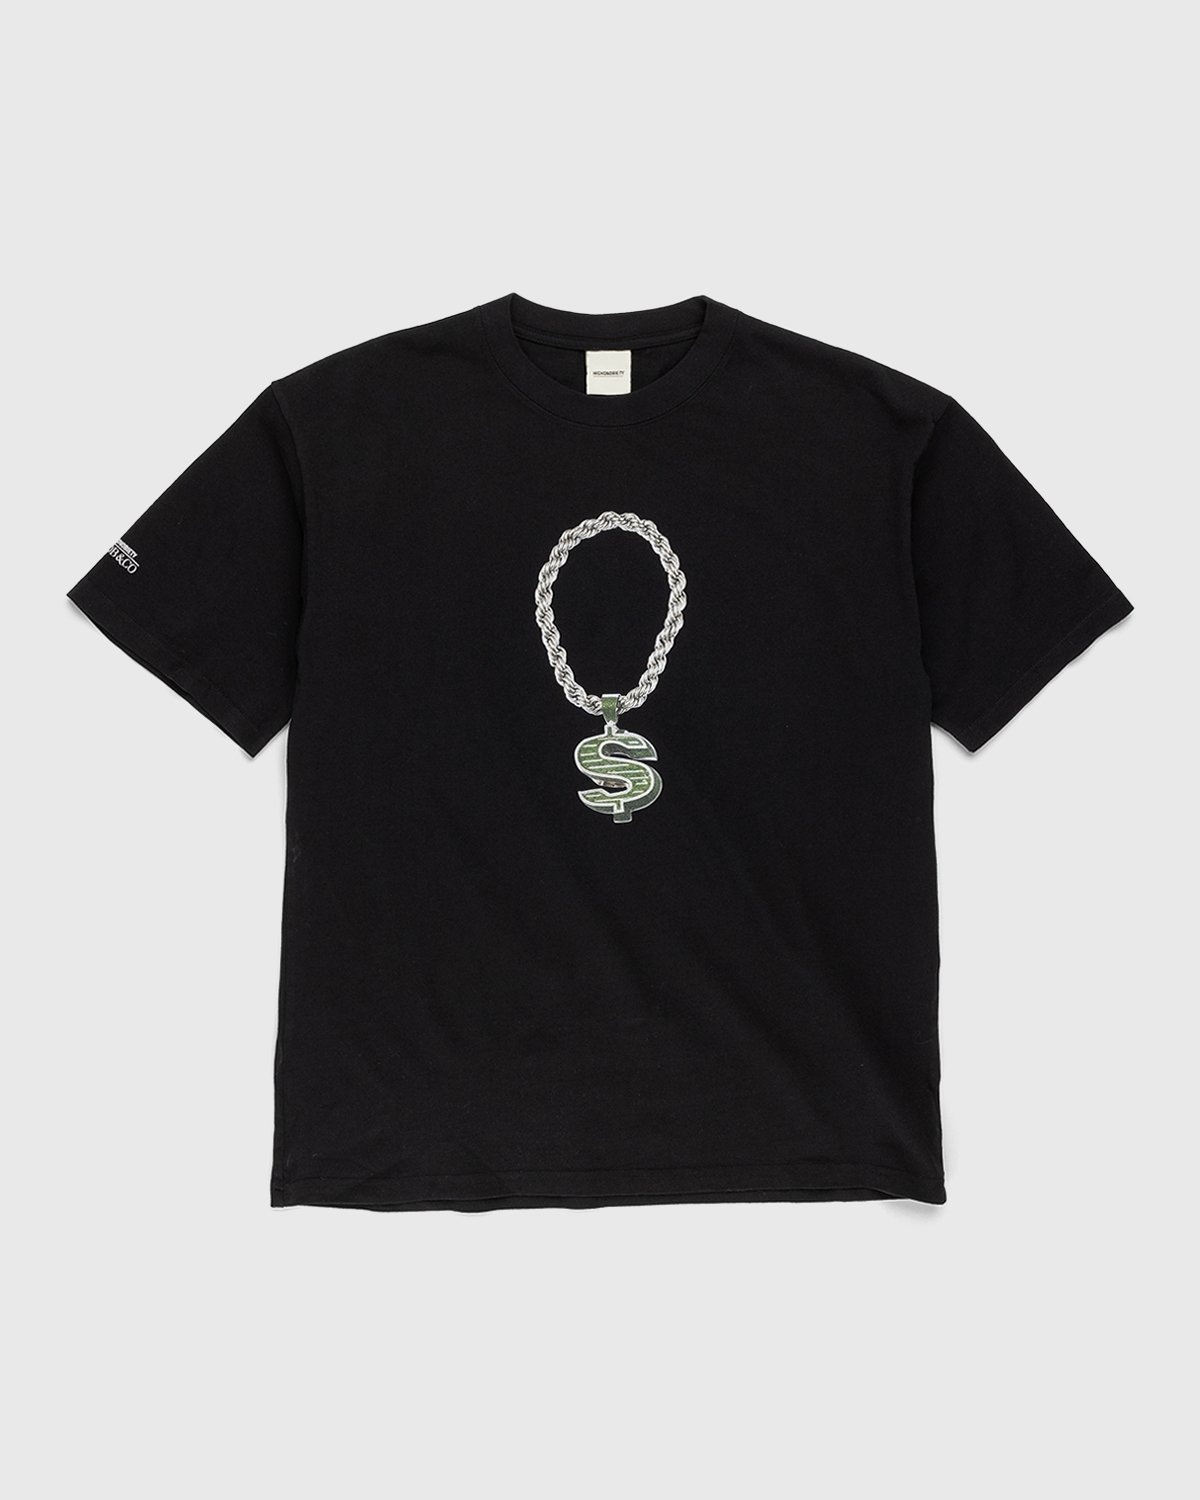 Jacob & Co. x Highsnobiety – Dollar Sign Pendant T-Shirt Black - T-Shirts - Black - Image 1